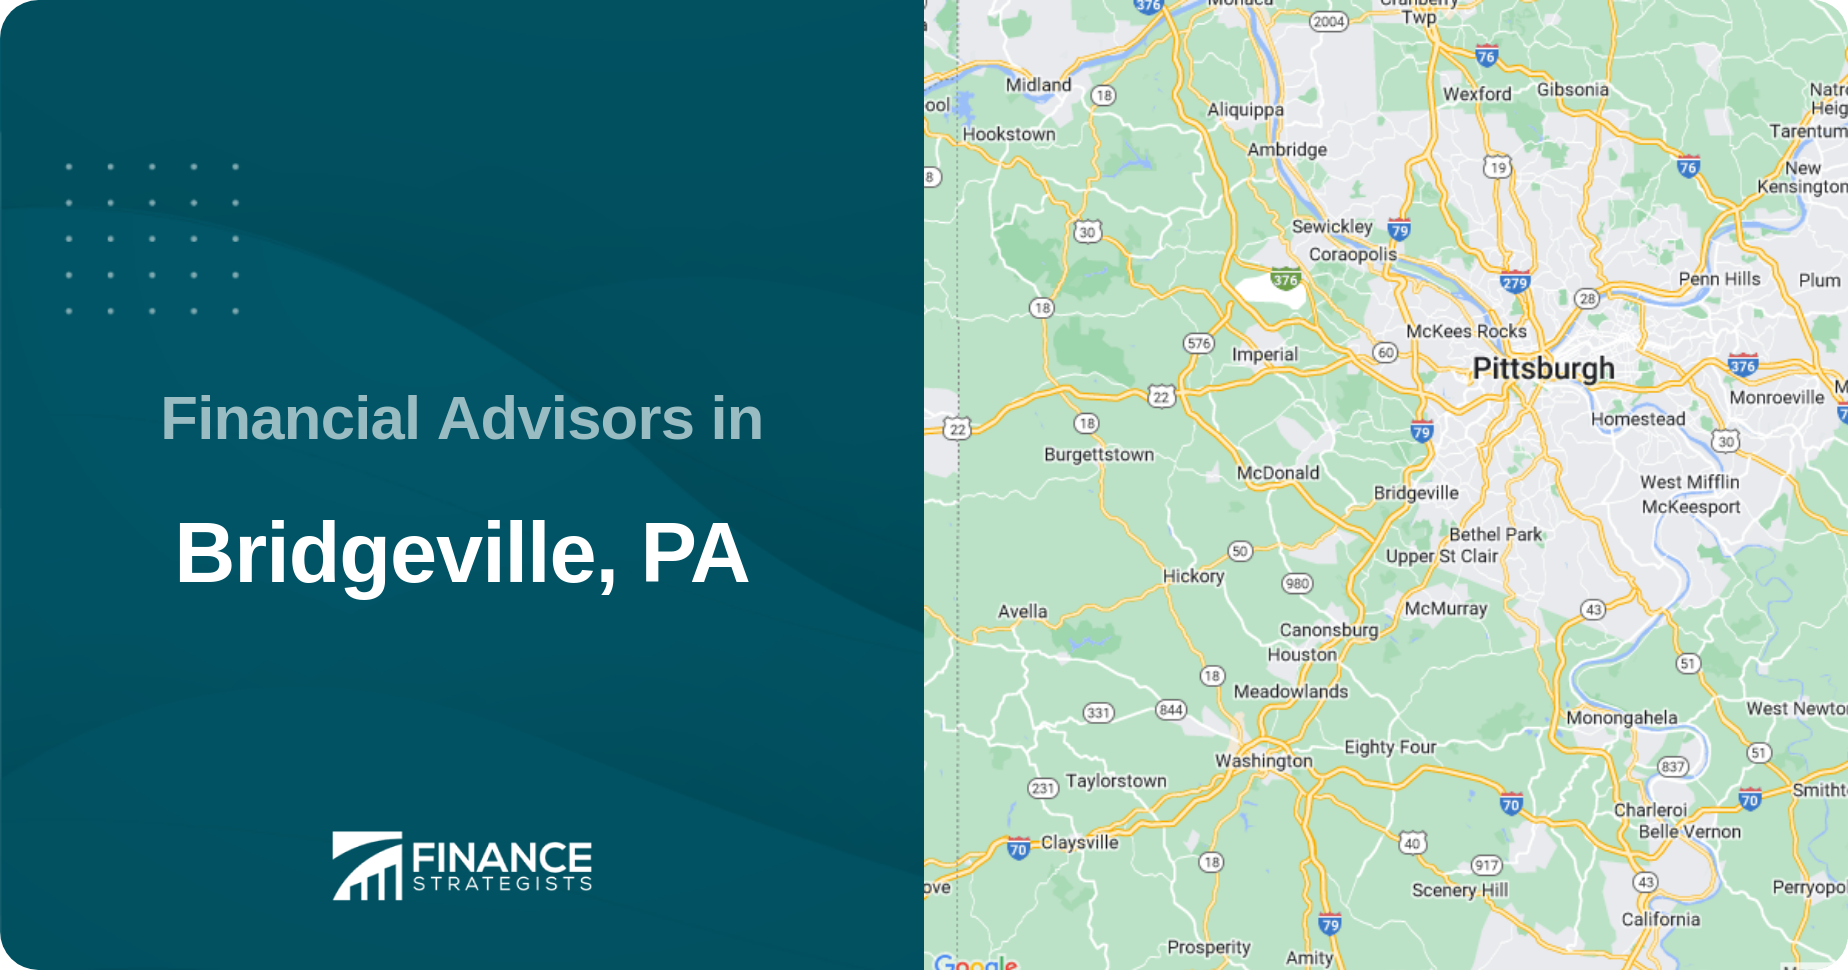 Financial Advisors in Bridgeville, PA